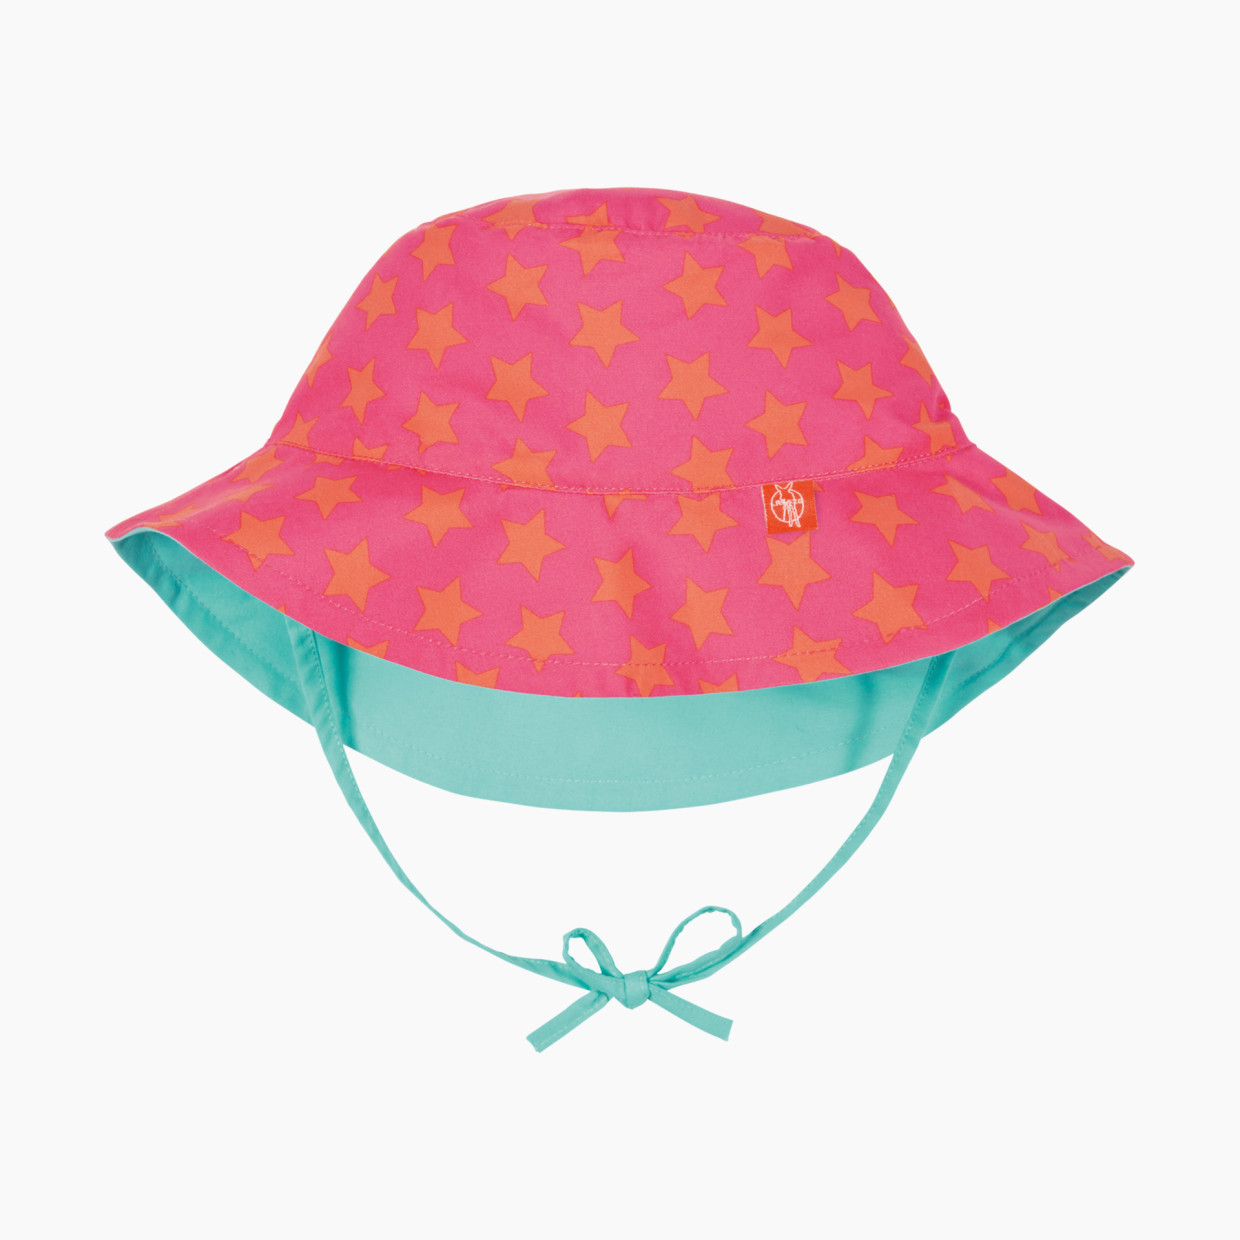 Lassig Sun Protection Bucket Hat - Pink Stars, 6-18 Months.